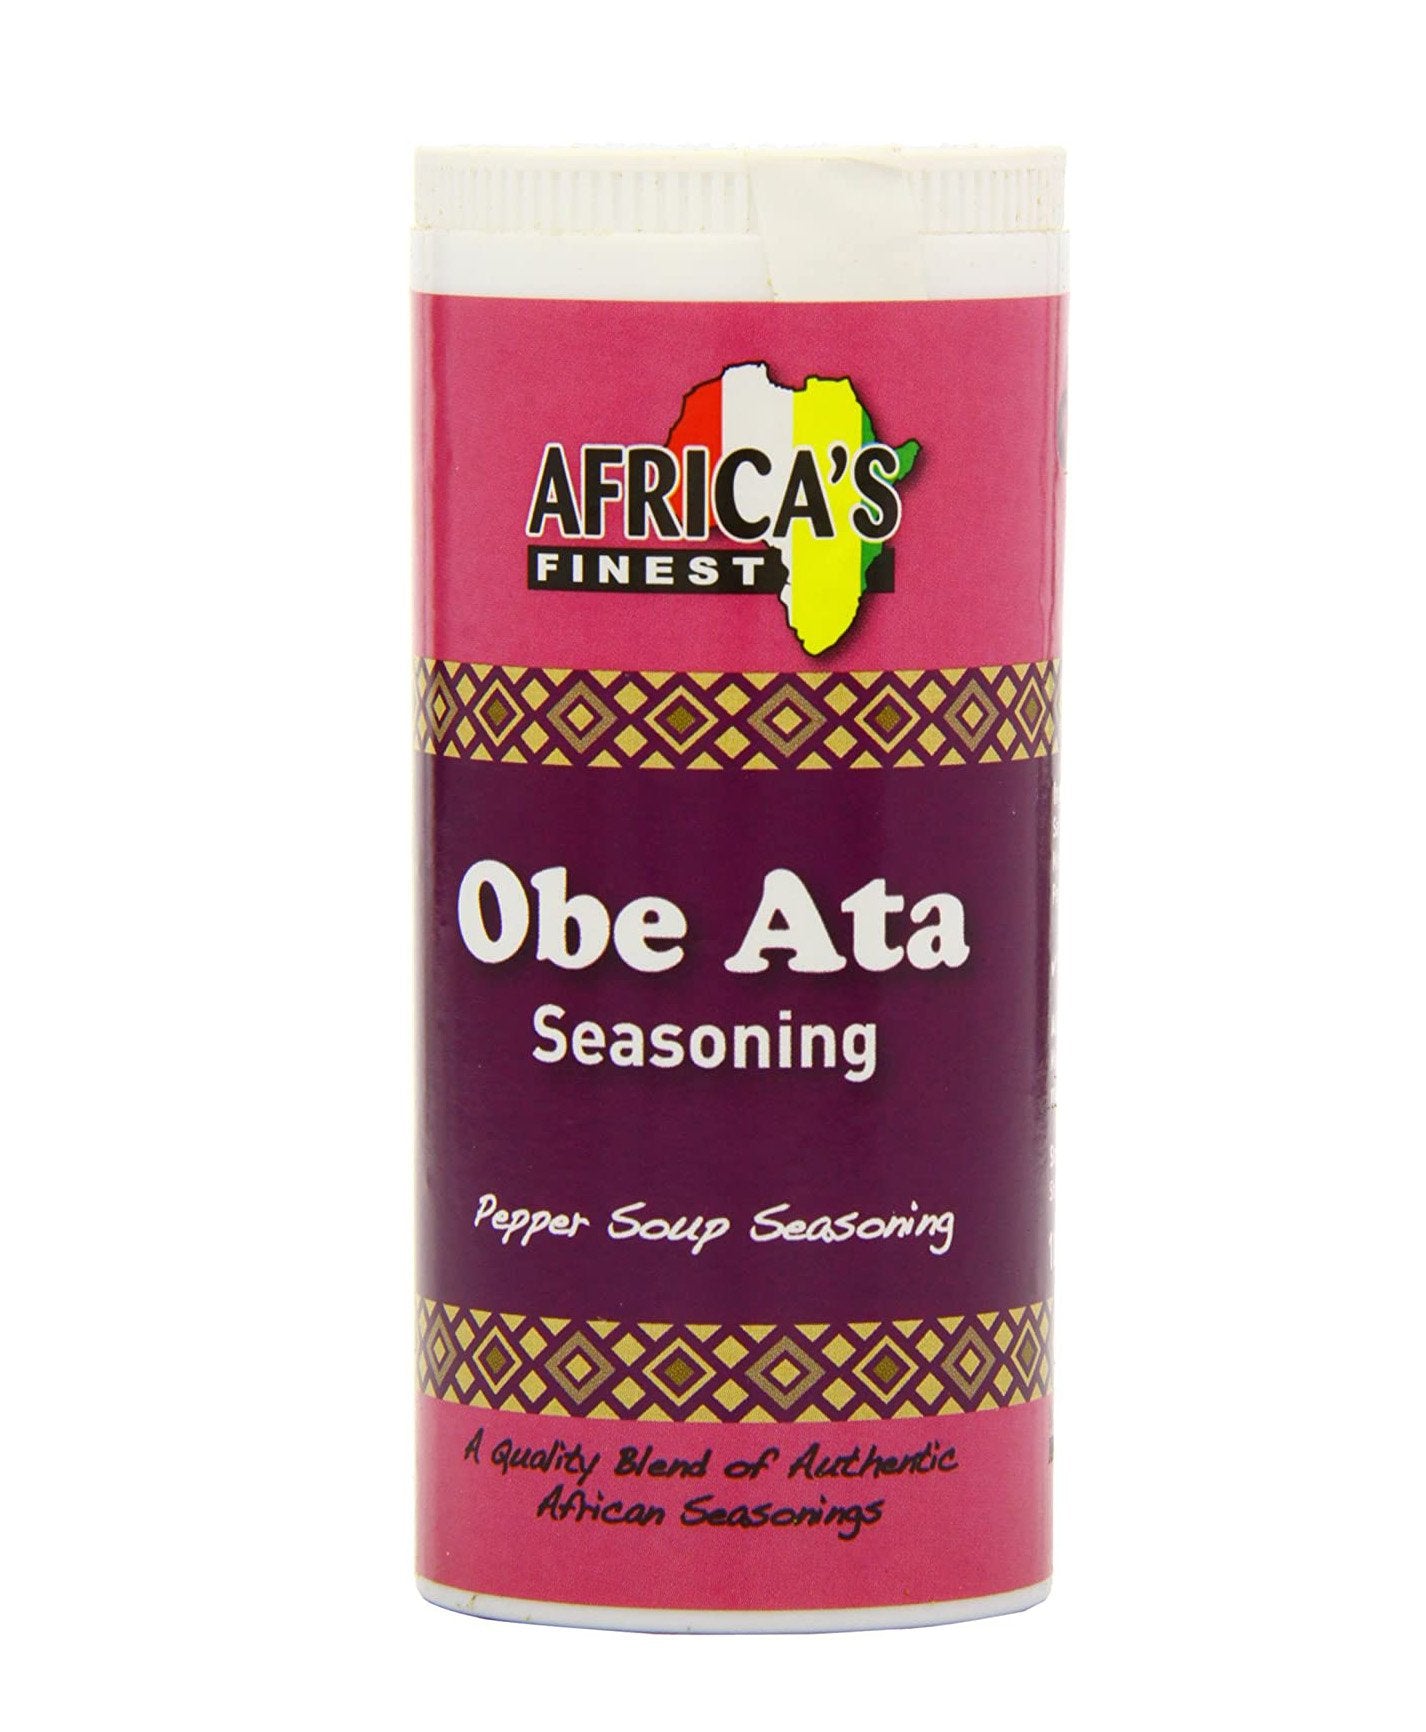 Africa's Finest Obe Ata Seasoning 100g Box of 12